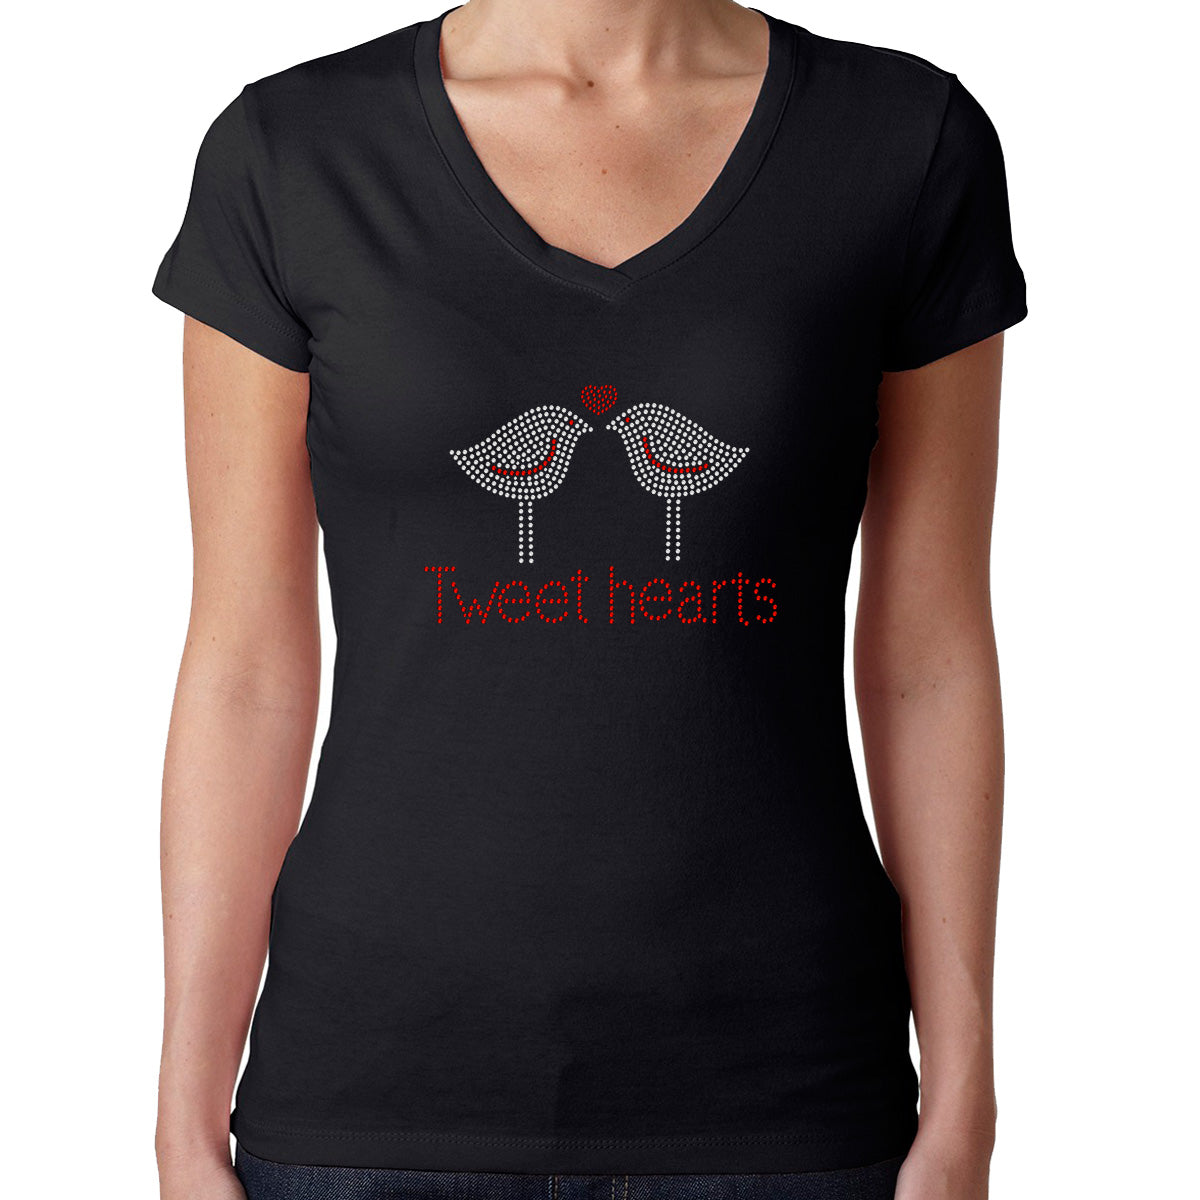 Womens T-Shirt Rhinestone Bling Black Fitted Tee Tweet Hearts Birds Love Heart